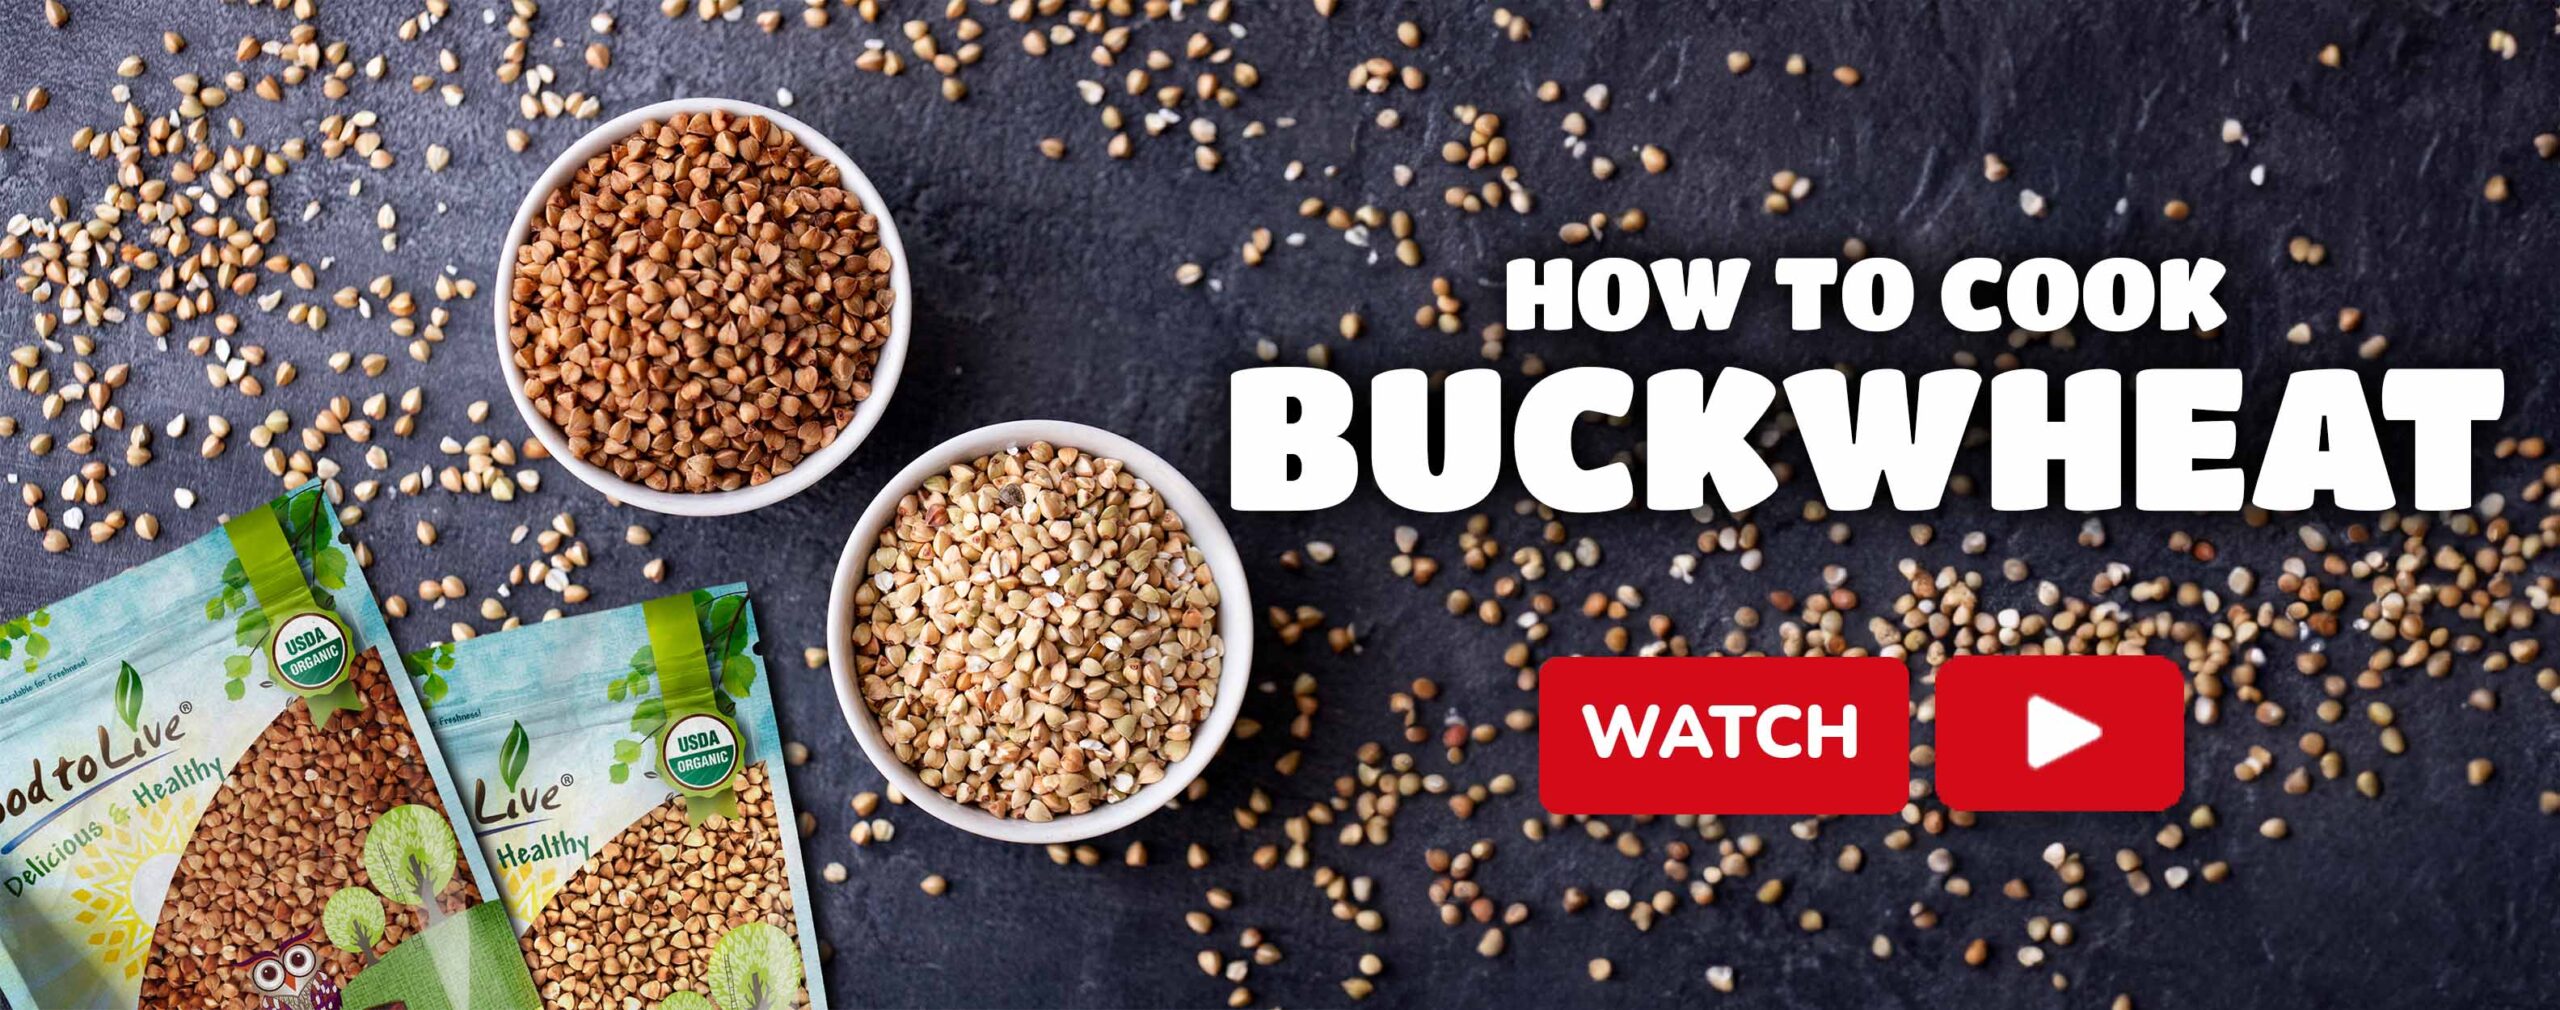 how-to-cook-buckwheat-new-recipe-web